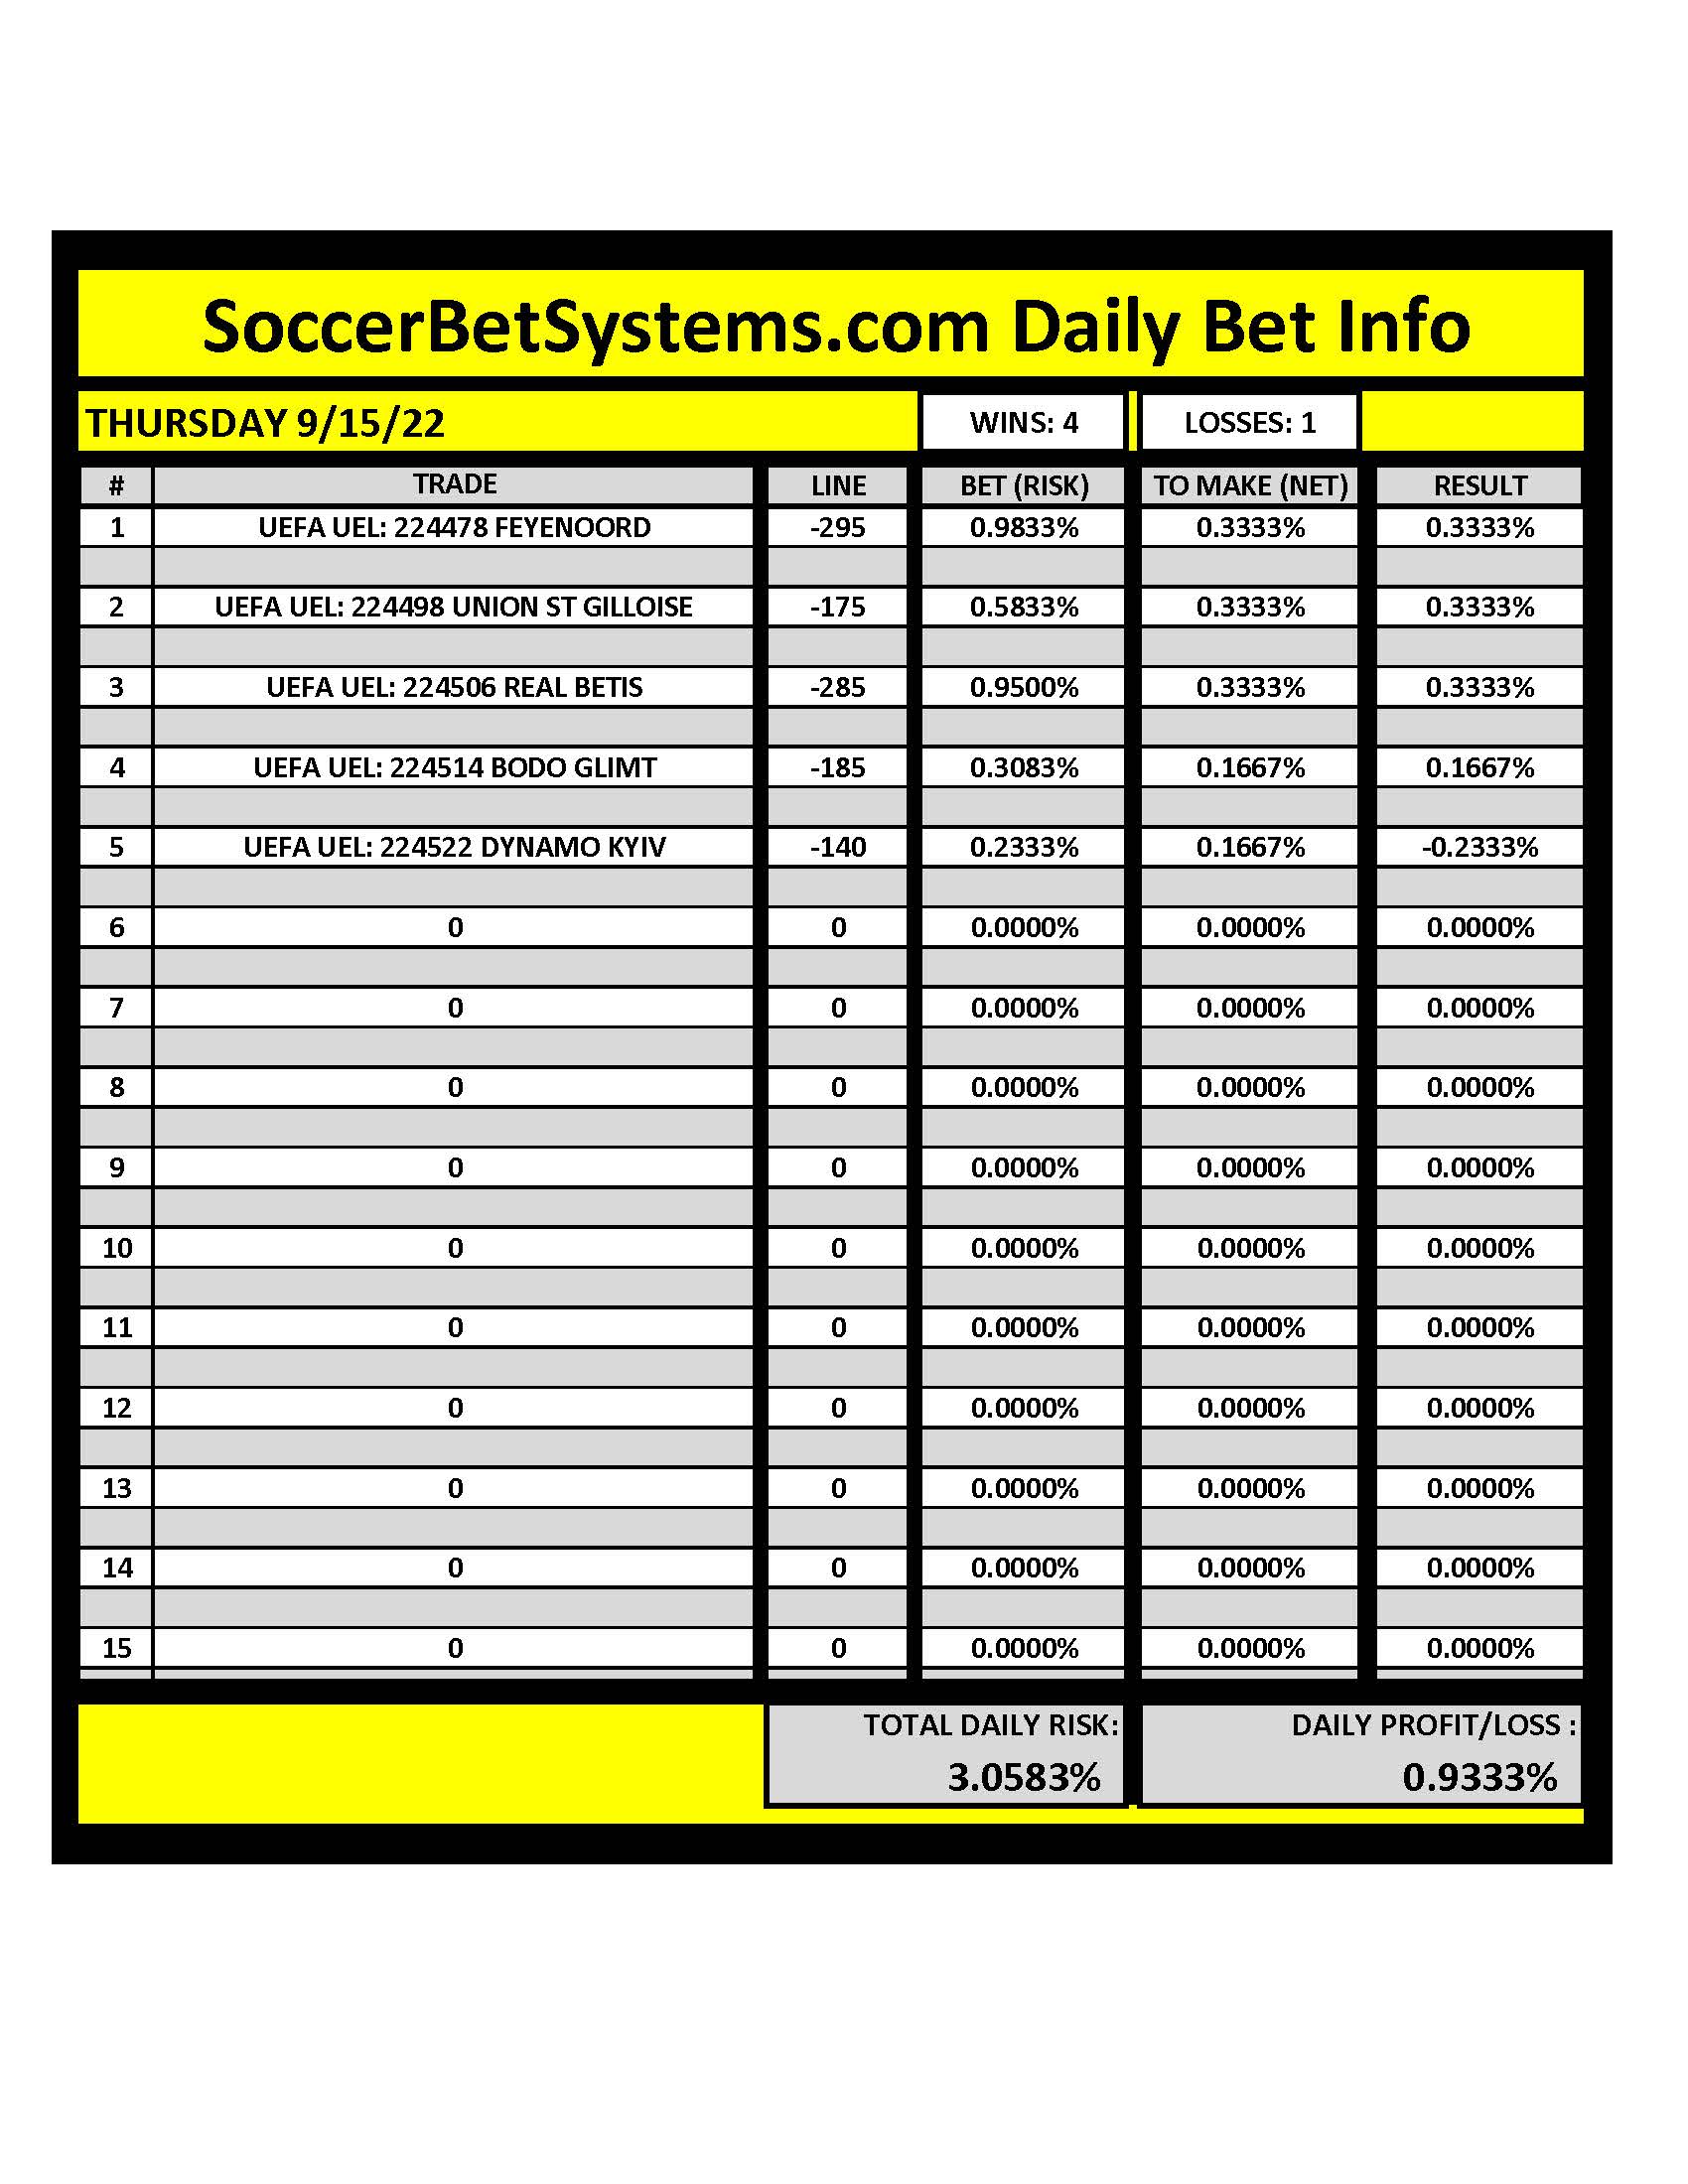 SoccerBetSystems.com 9/15/22 Daily Results